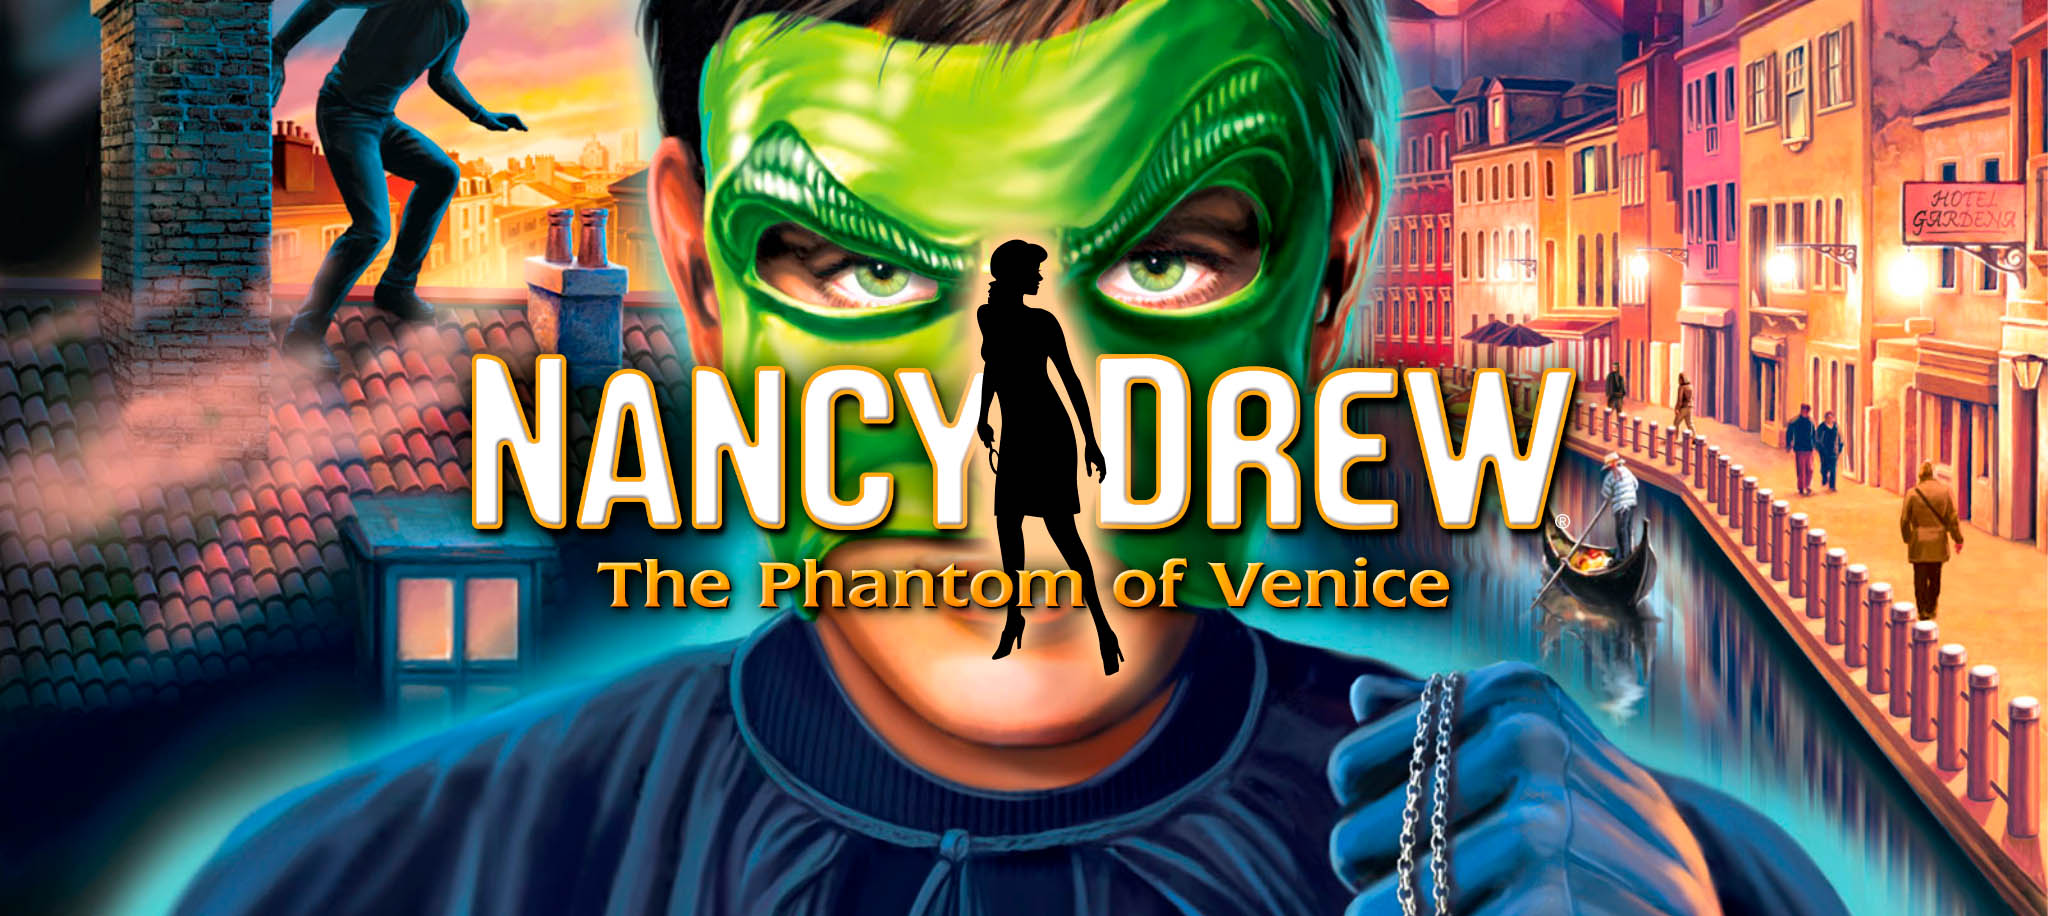 The Phantom of Venice